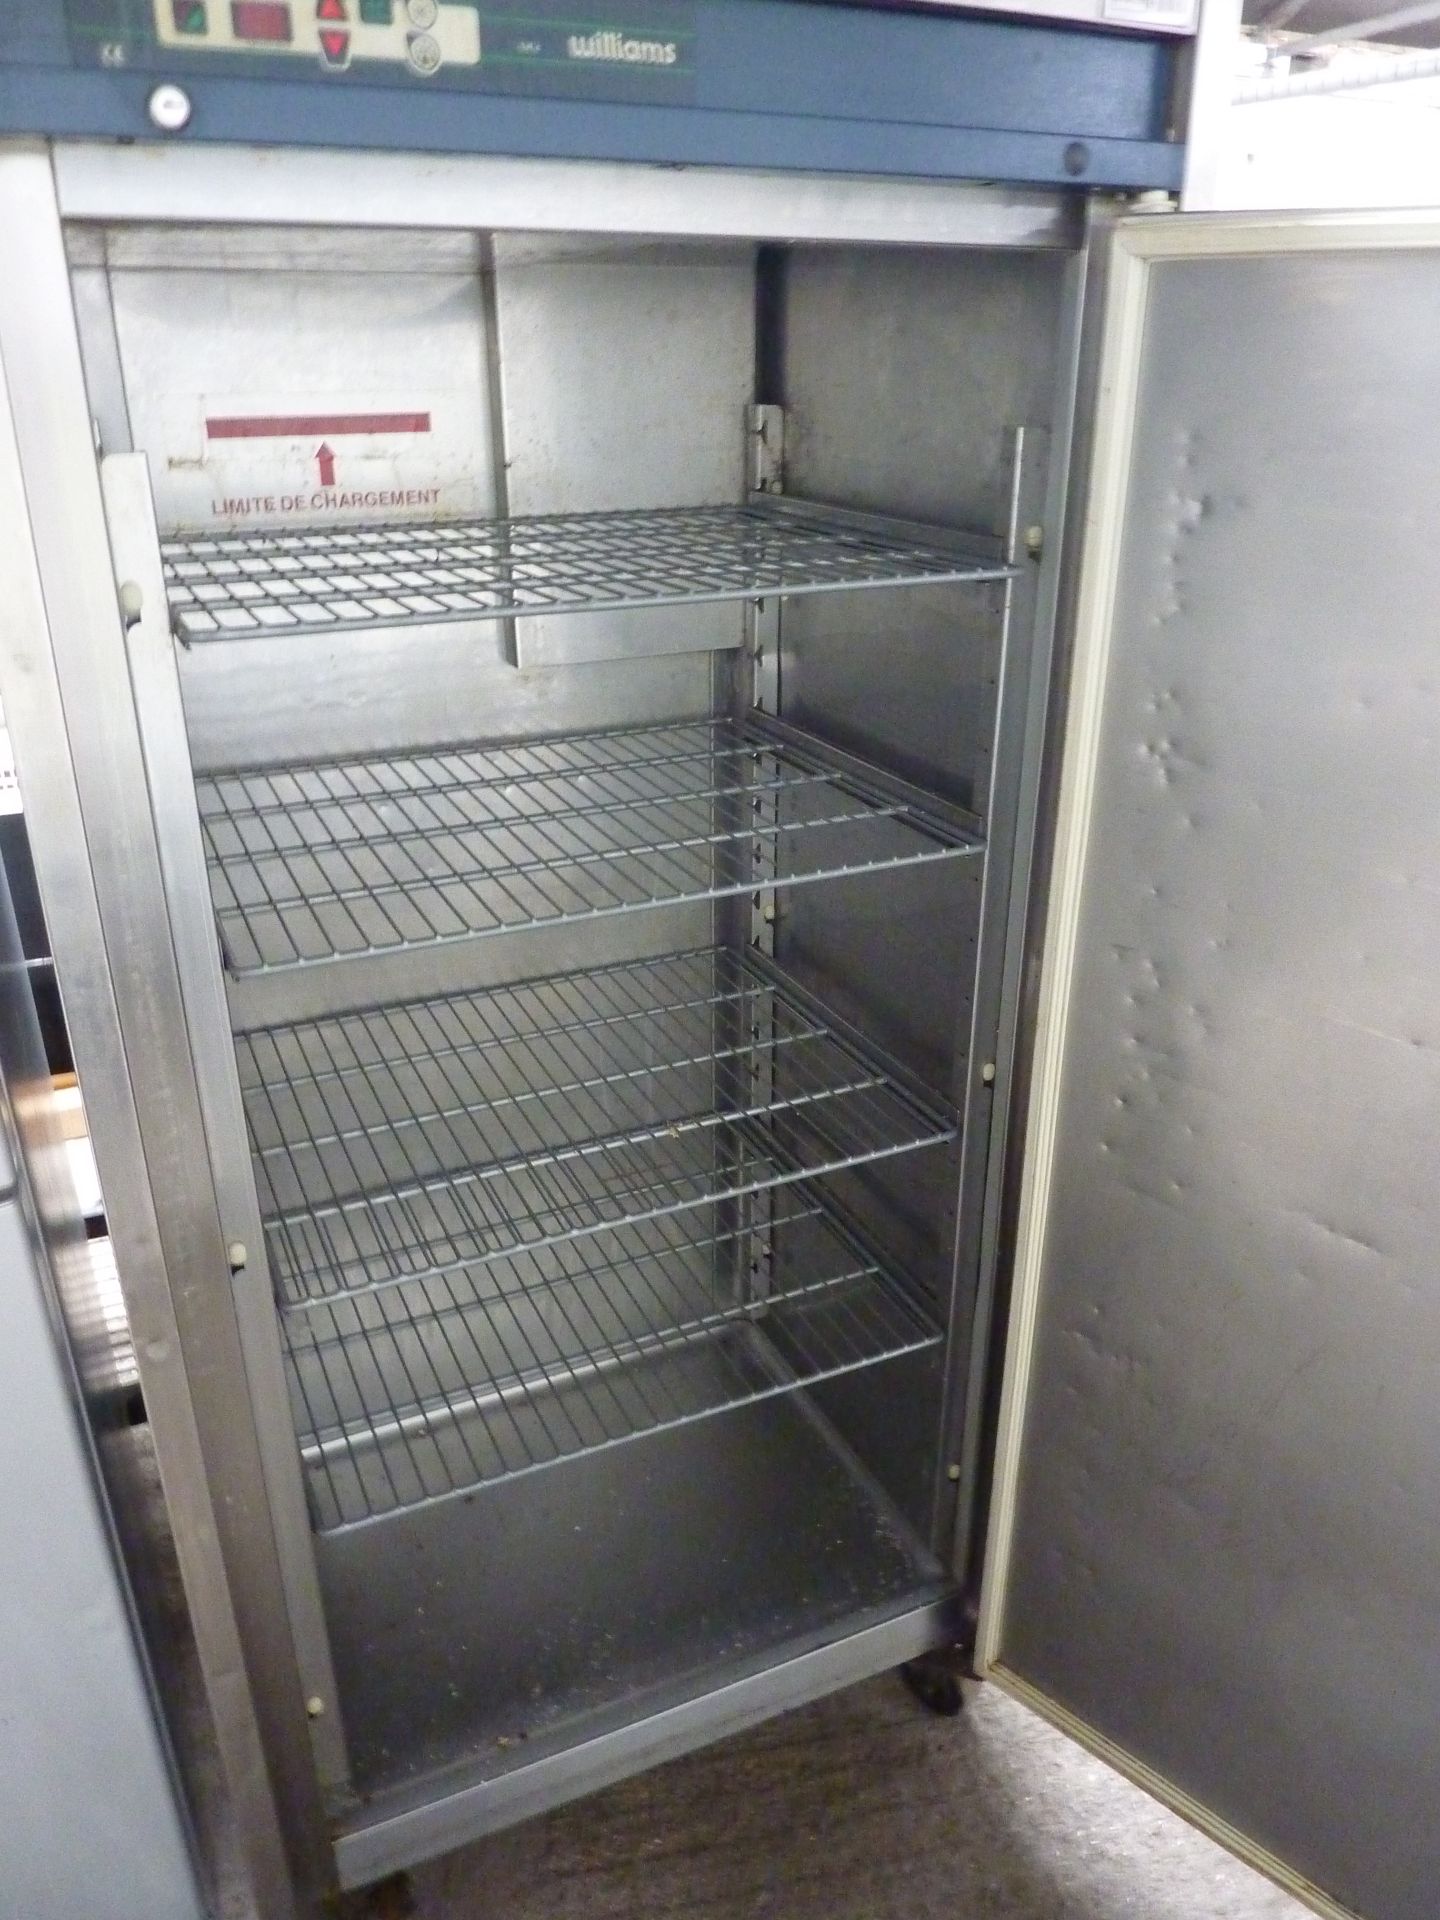 Wiliams single door upright fridge - Image 2 of 3